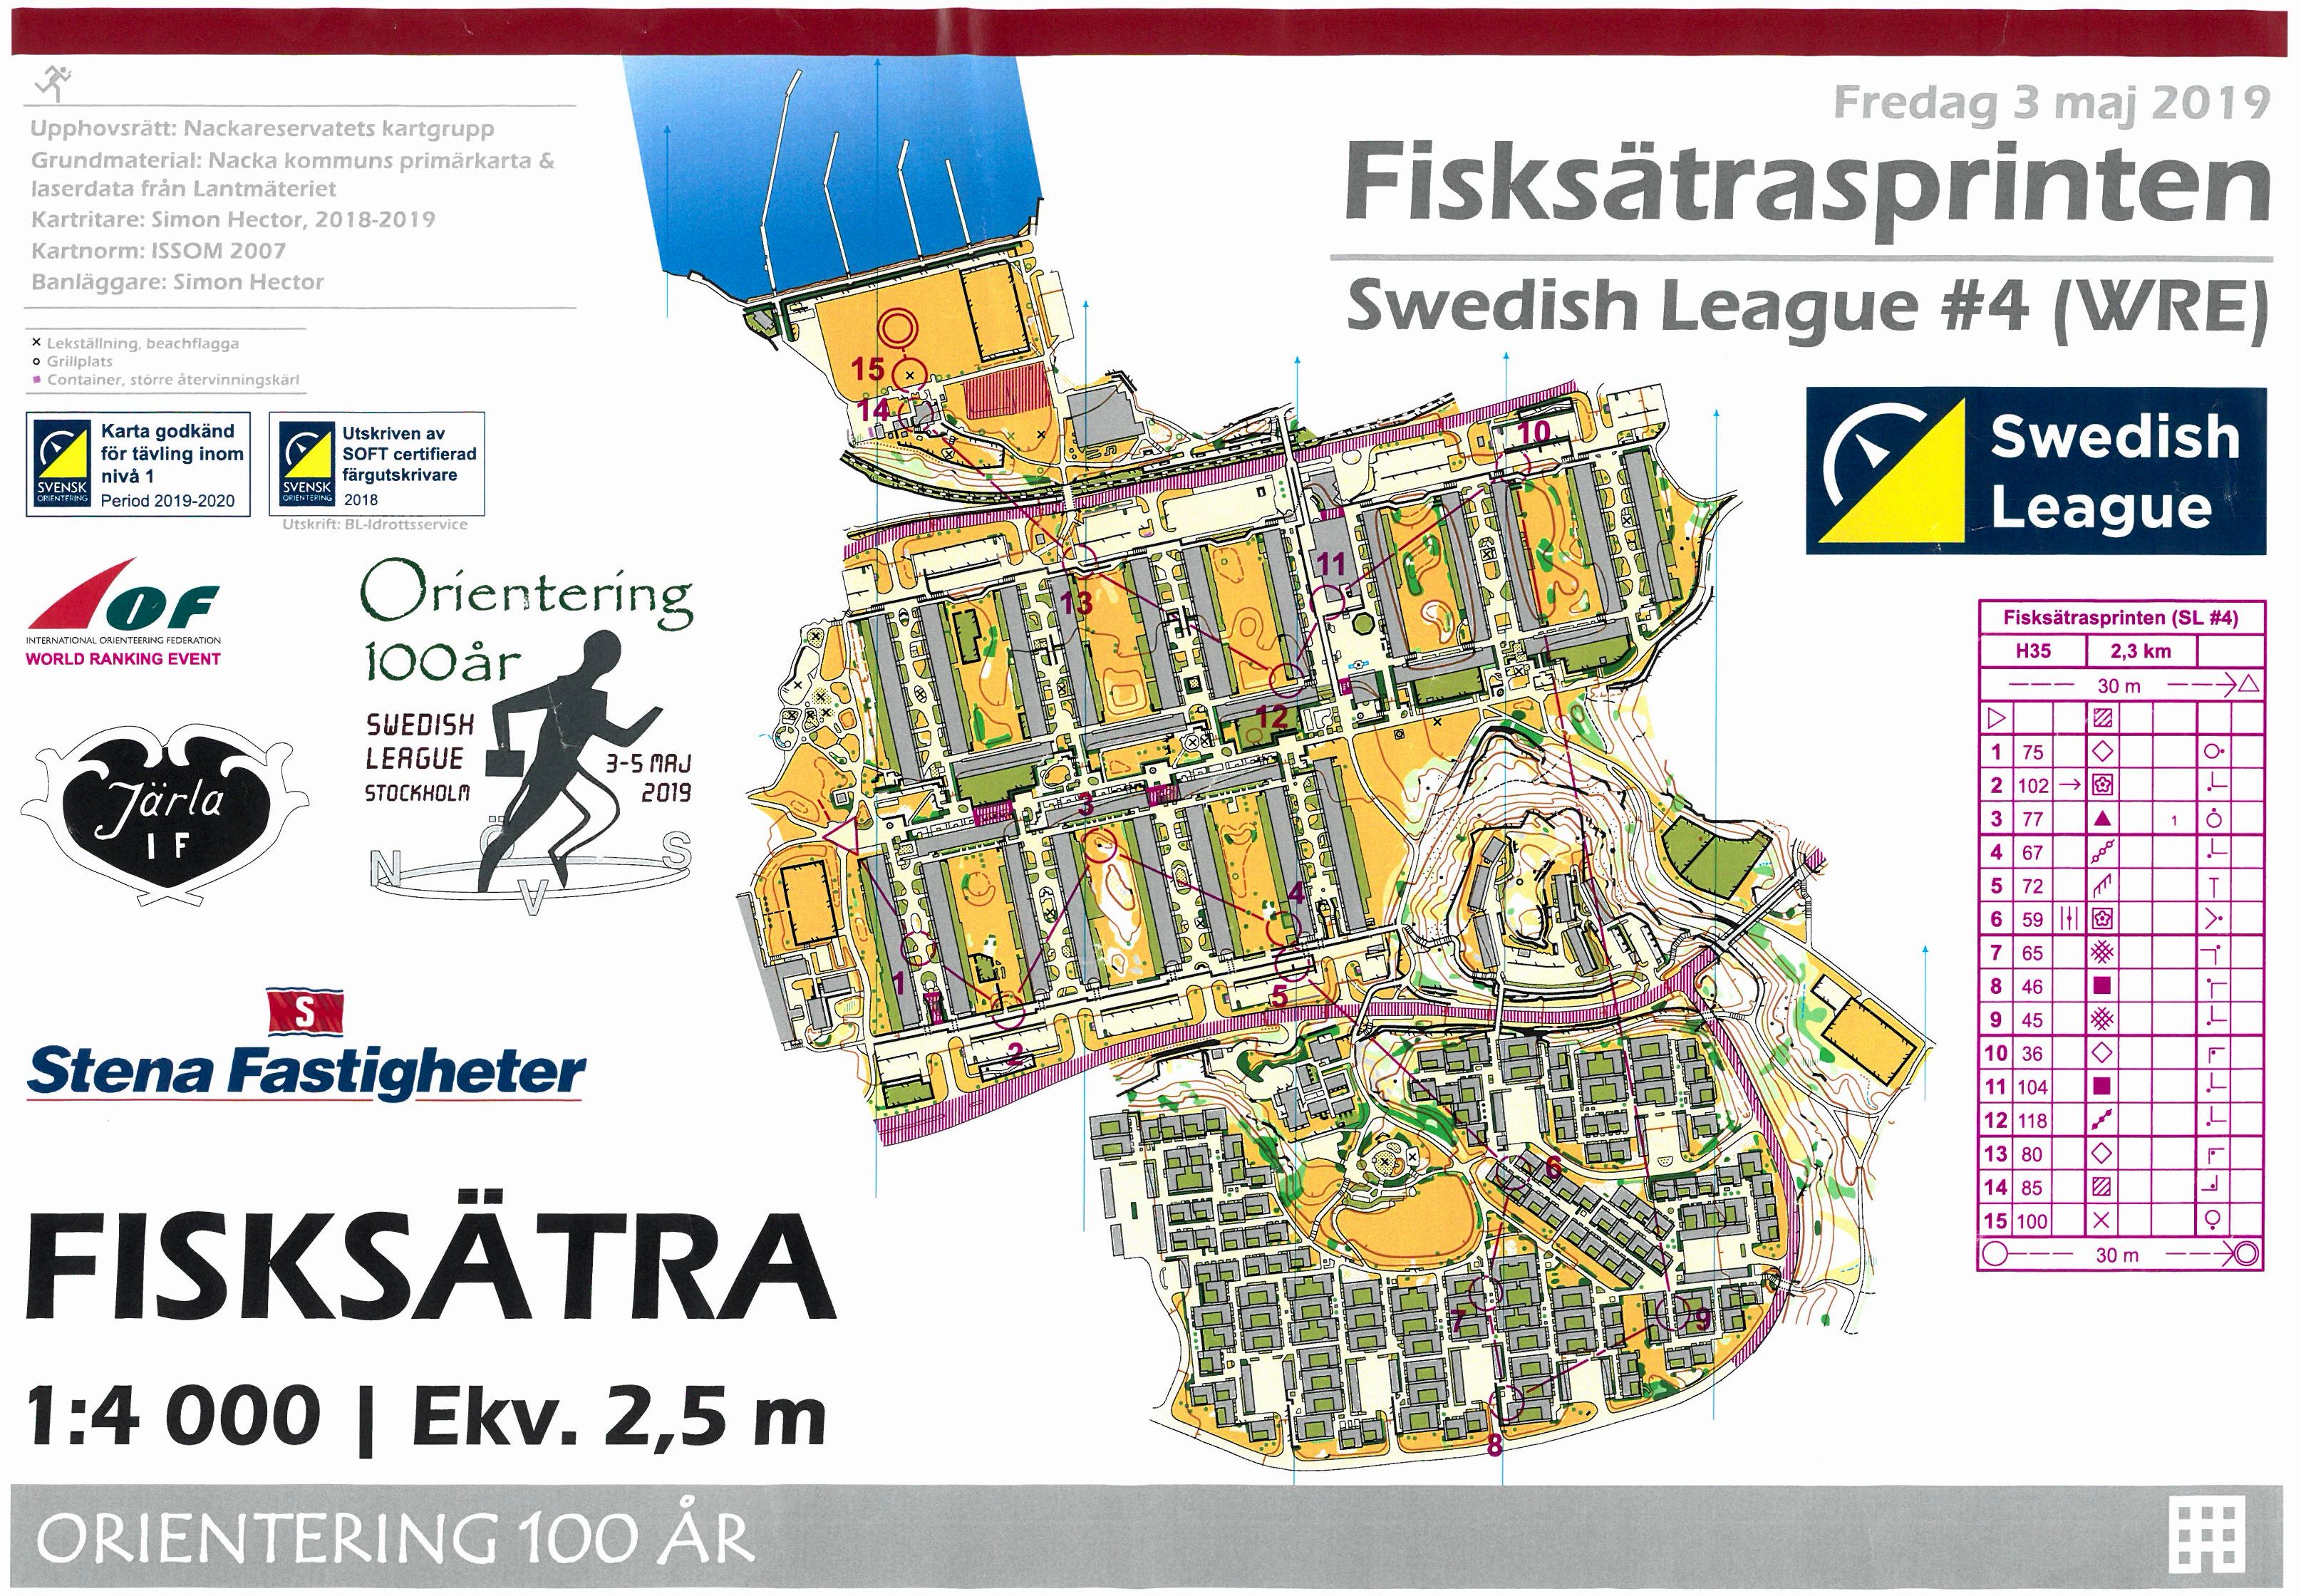 Swedish League #4 - Stockholm (03/05/2019)